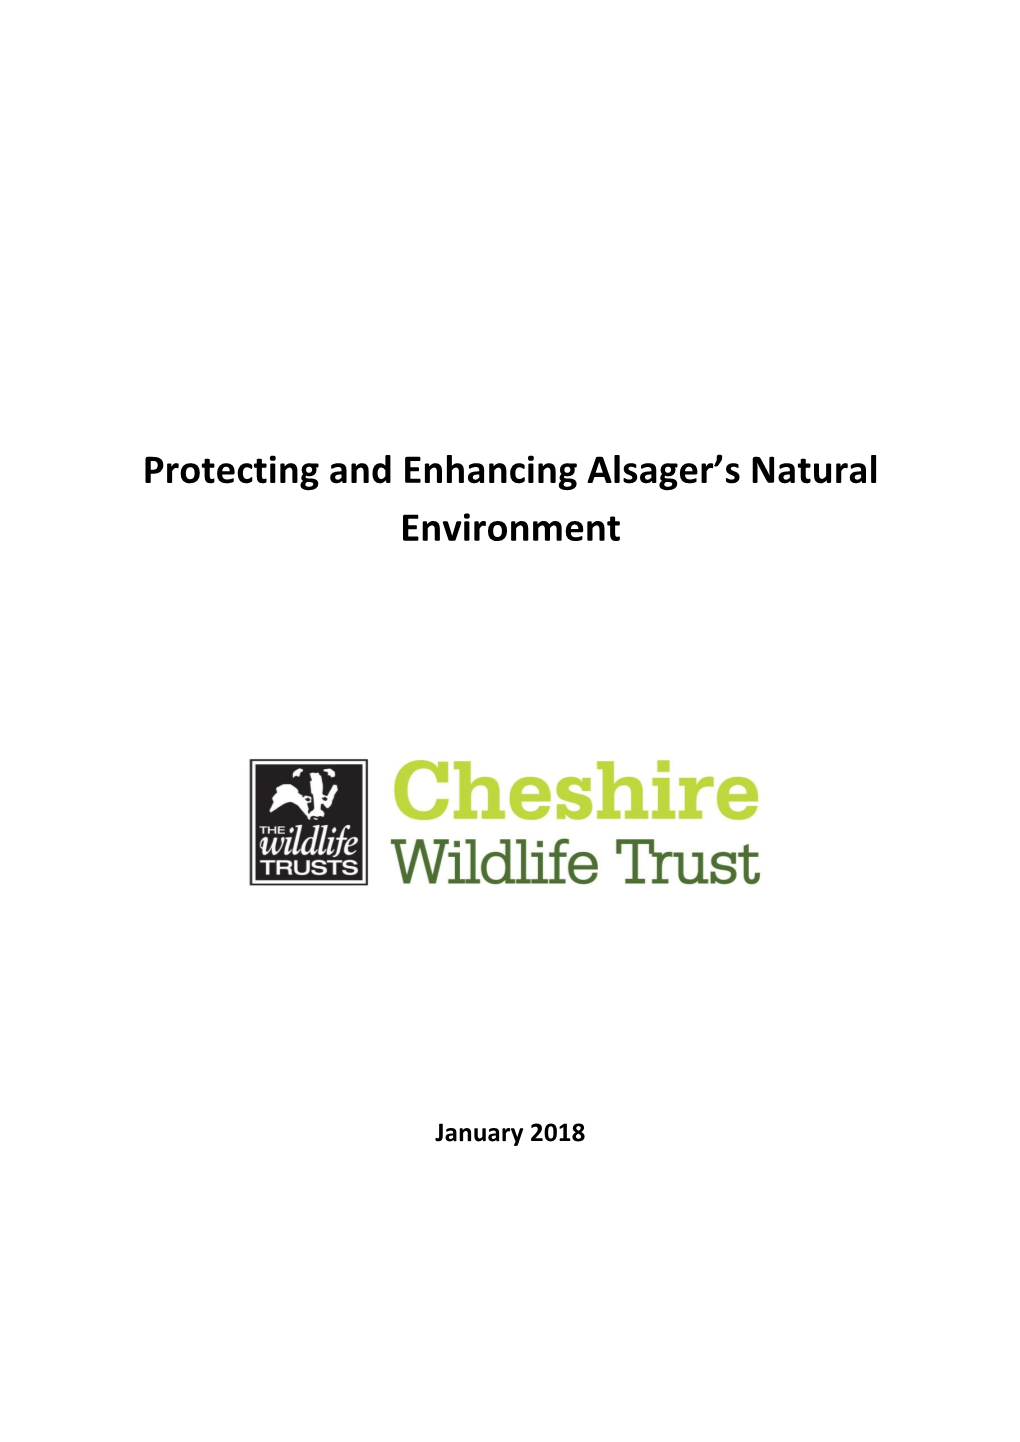 Protecting and Enhancing Alsager's Natural Environment